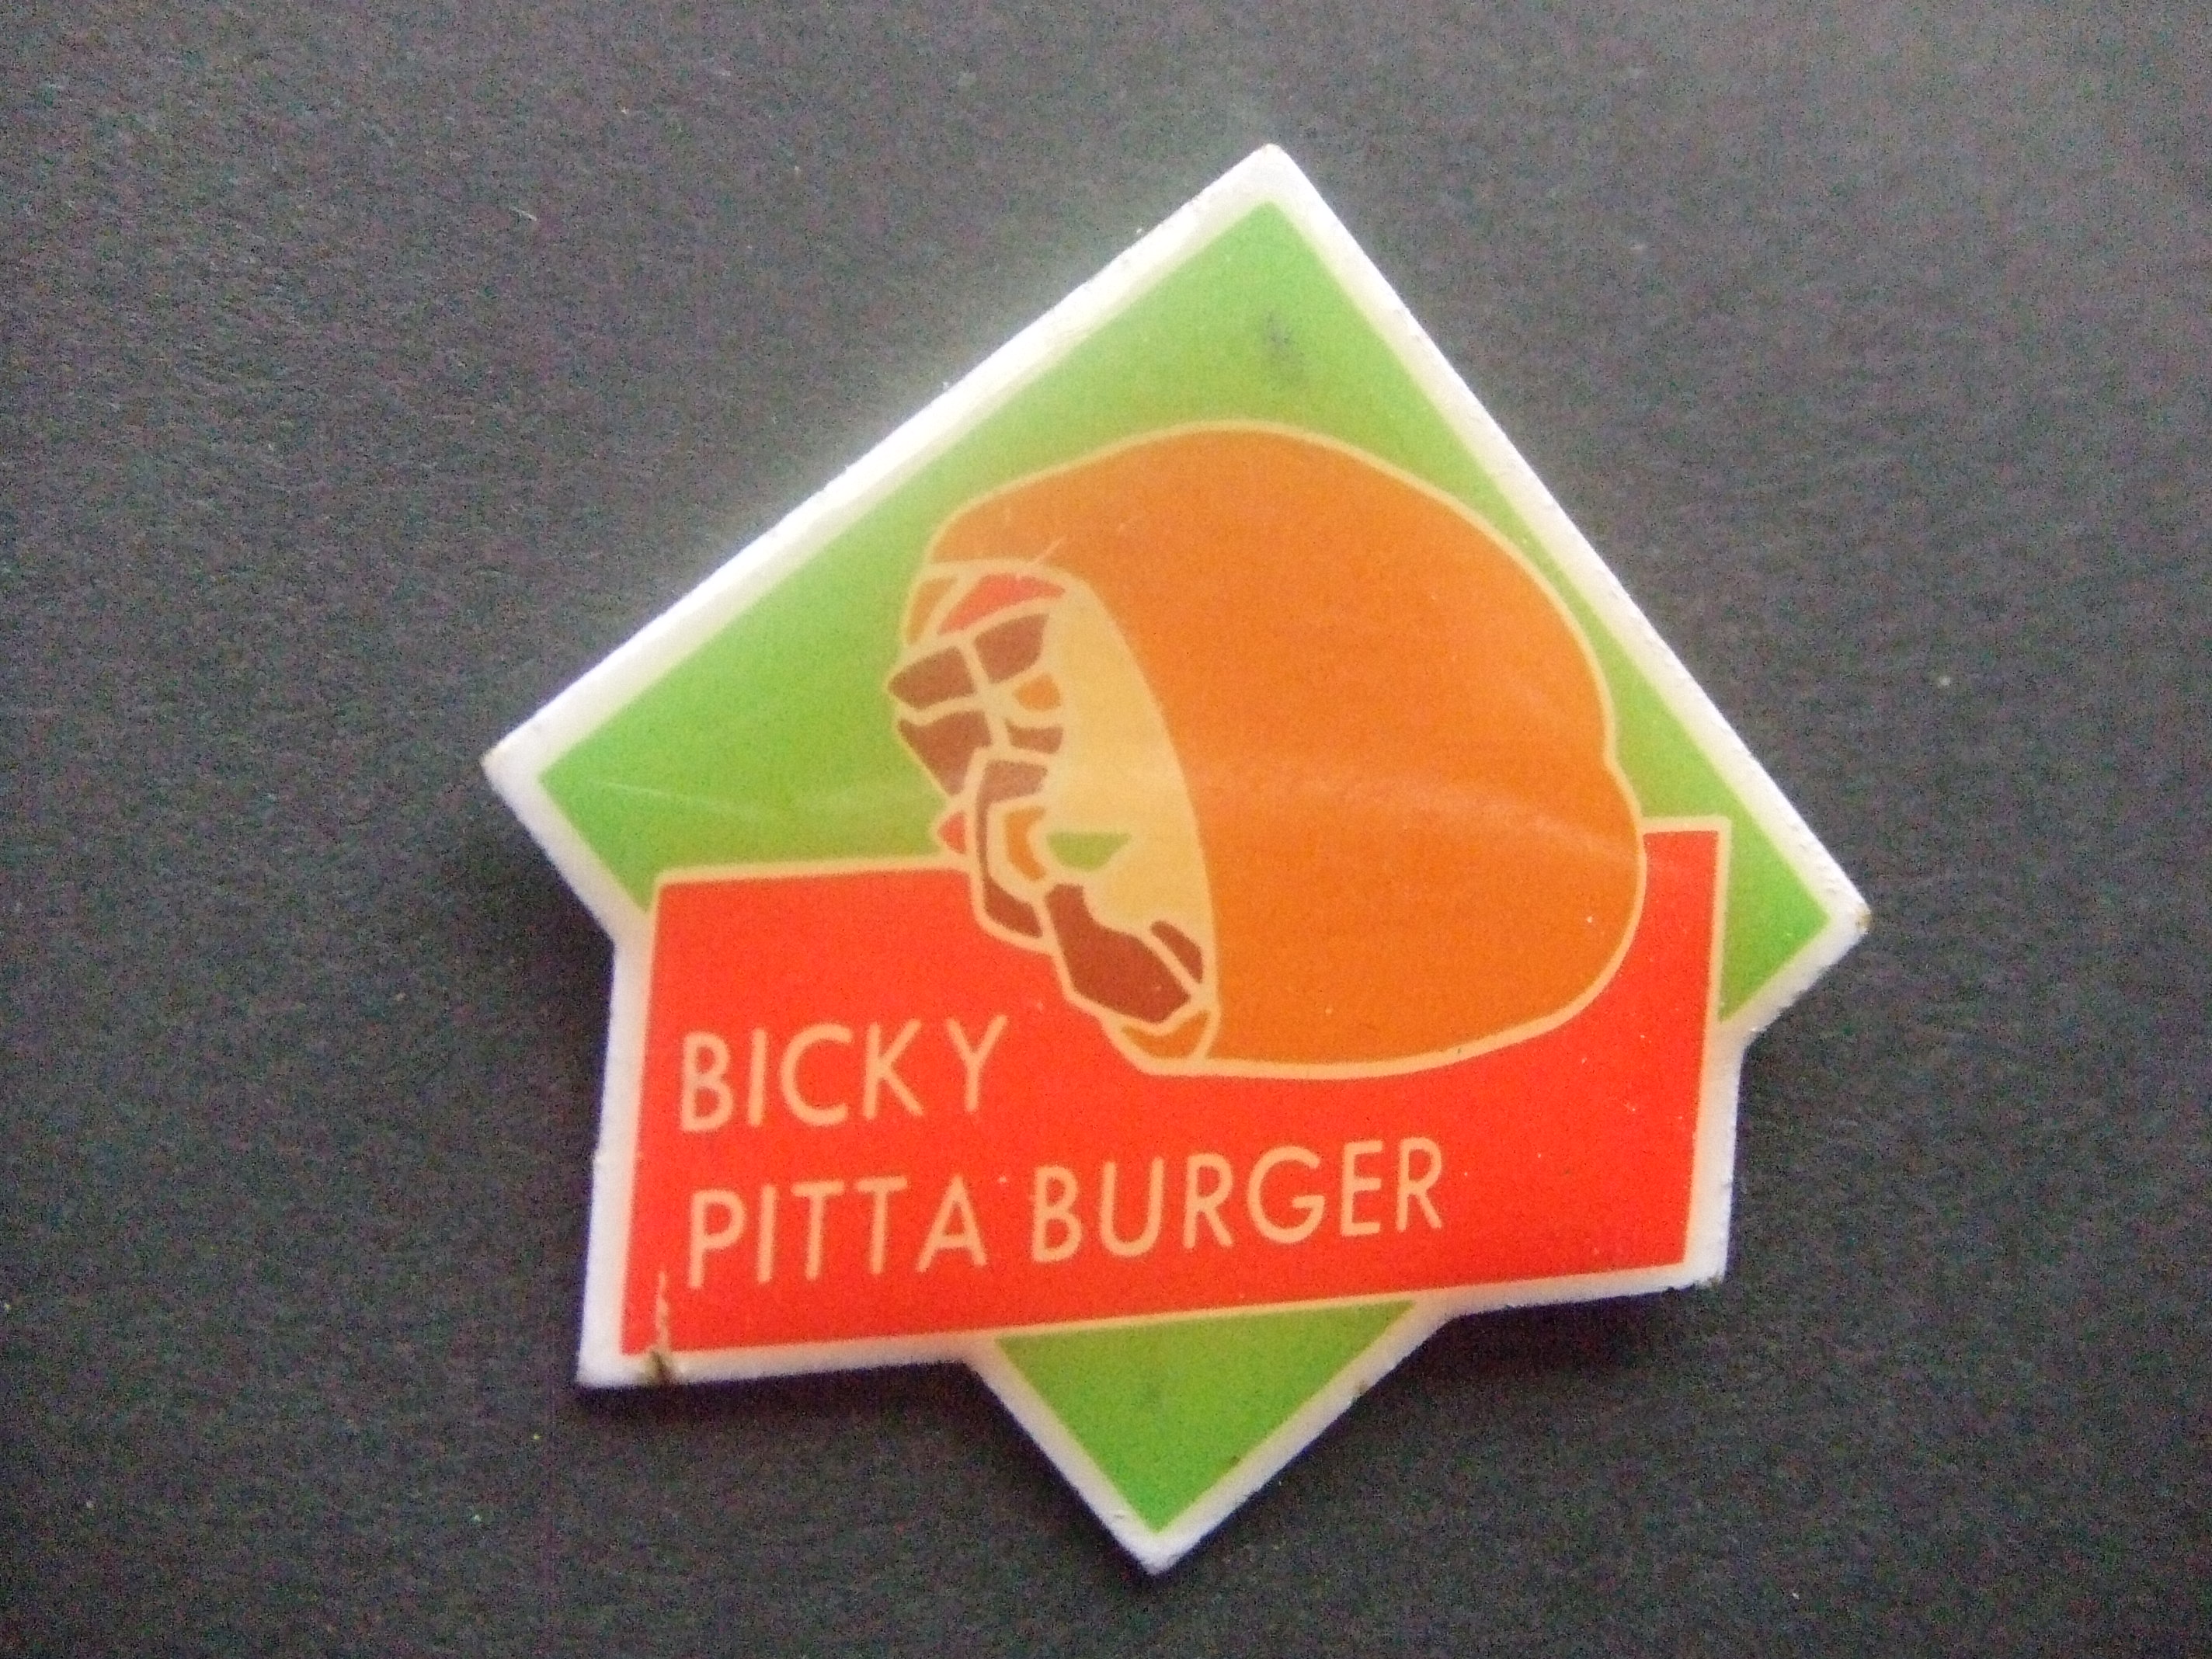 Bicky Pitta Burger